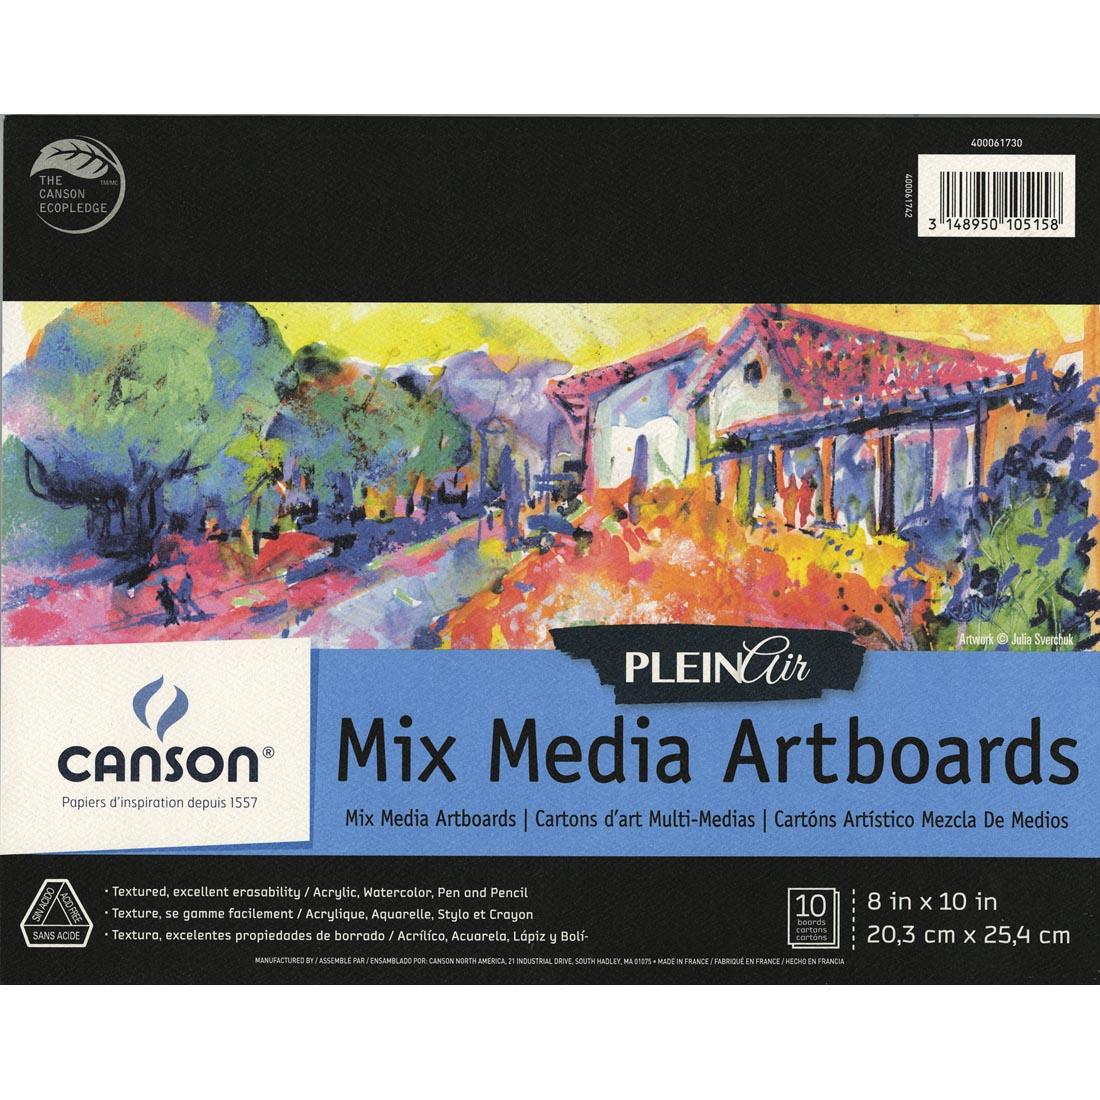 Canson Plein Air Mix Media Artboards